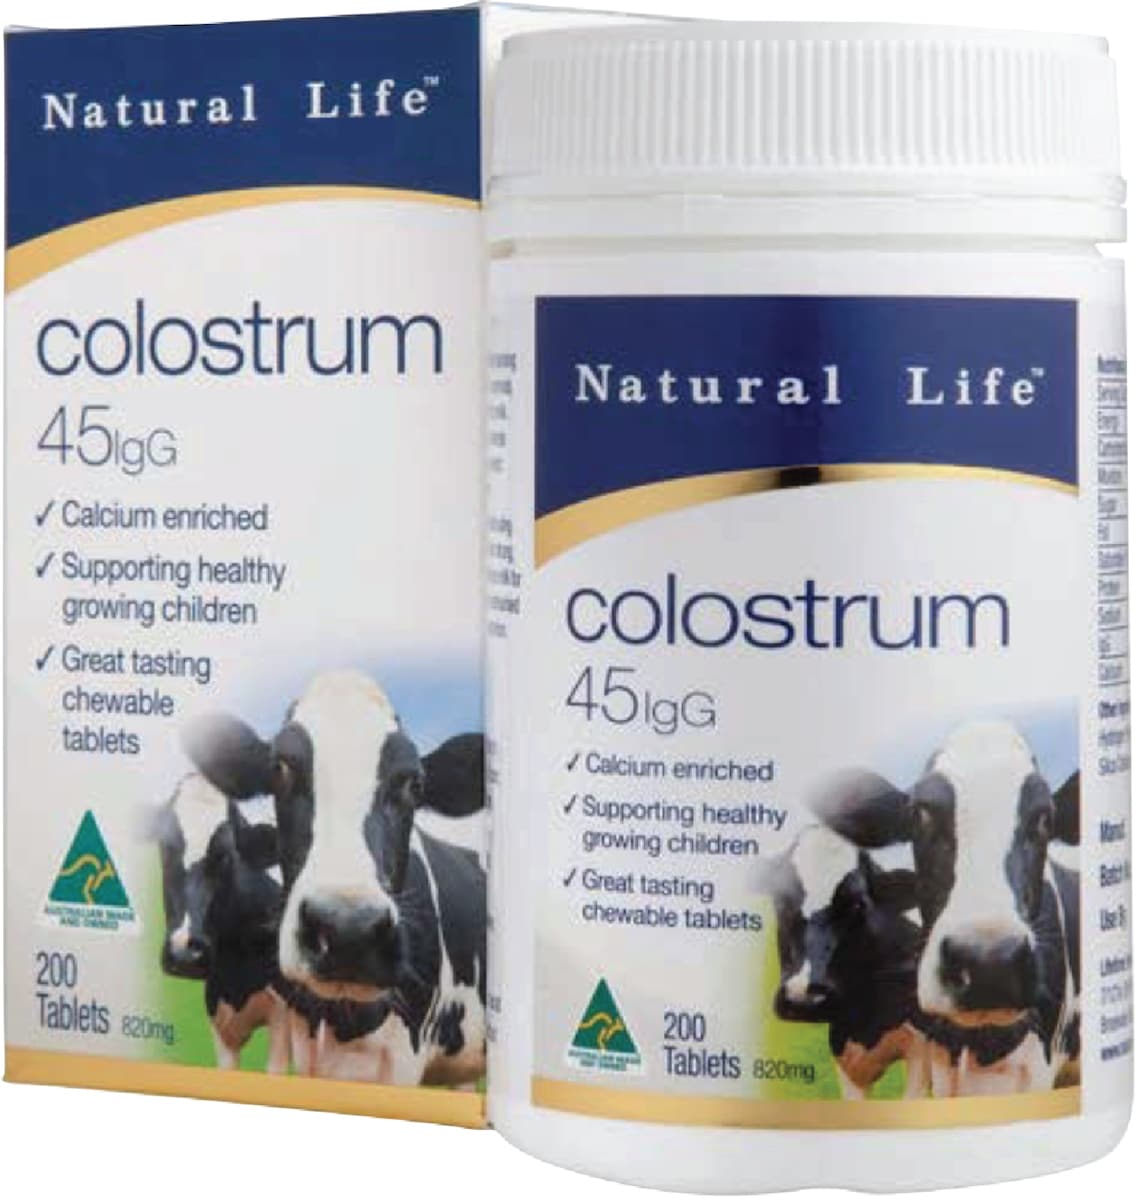 Natural Life Colostrum 45mg IgG 200 chewable tablets Australia